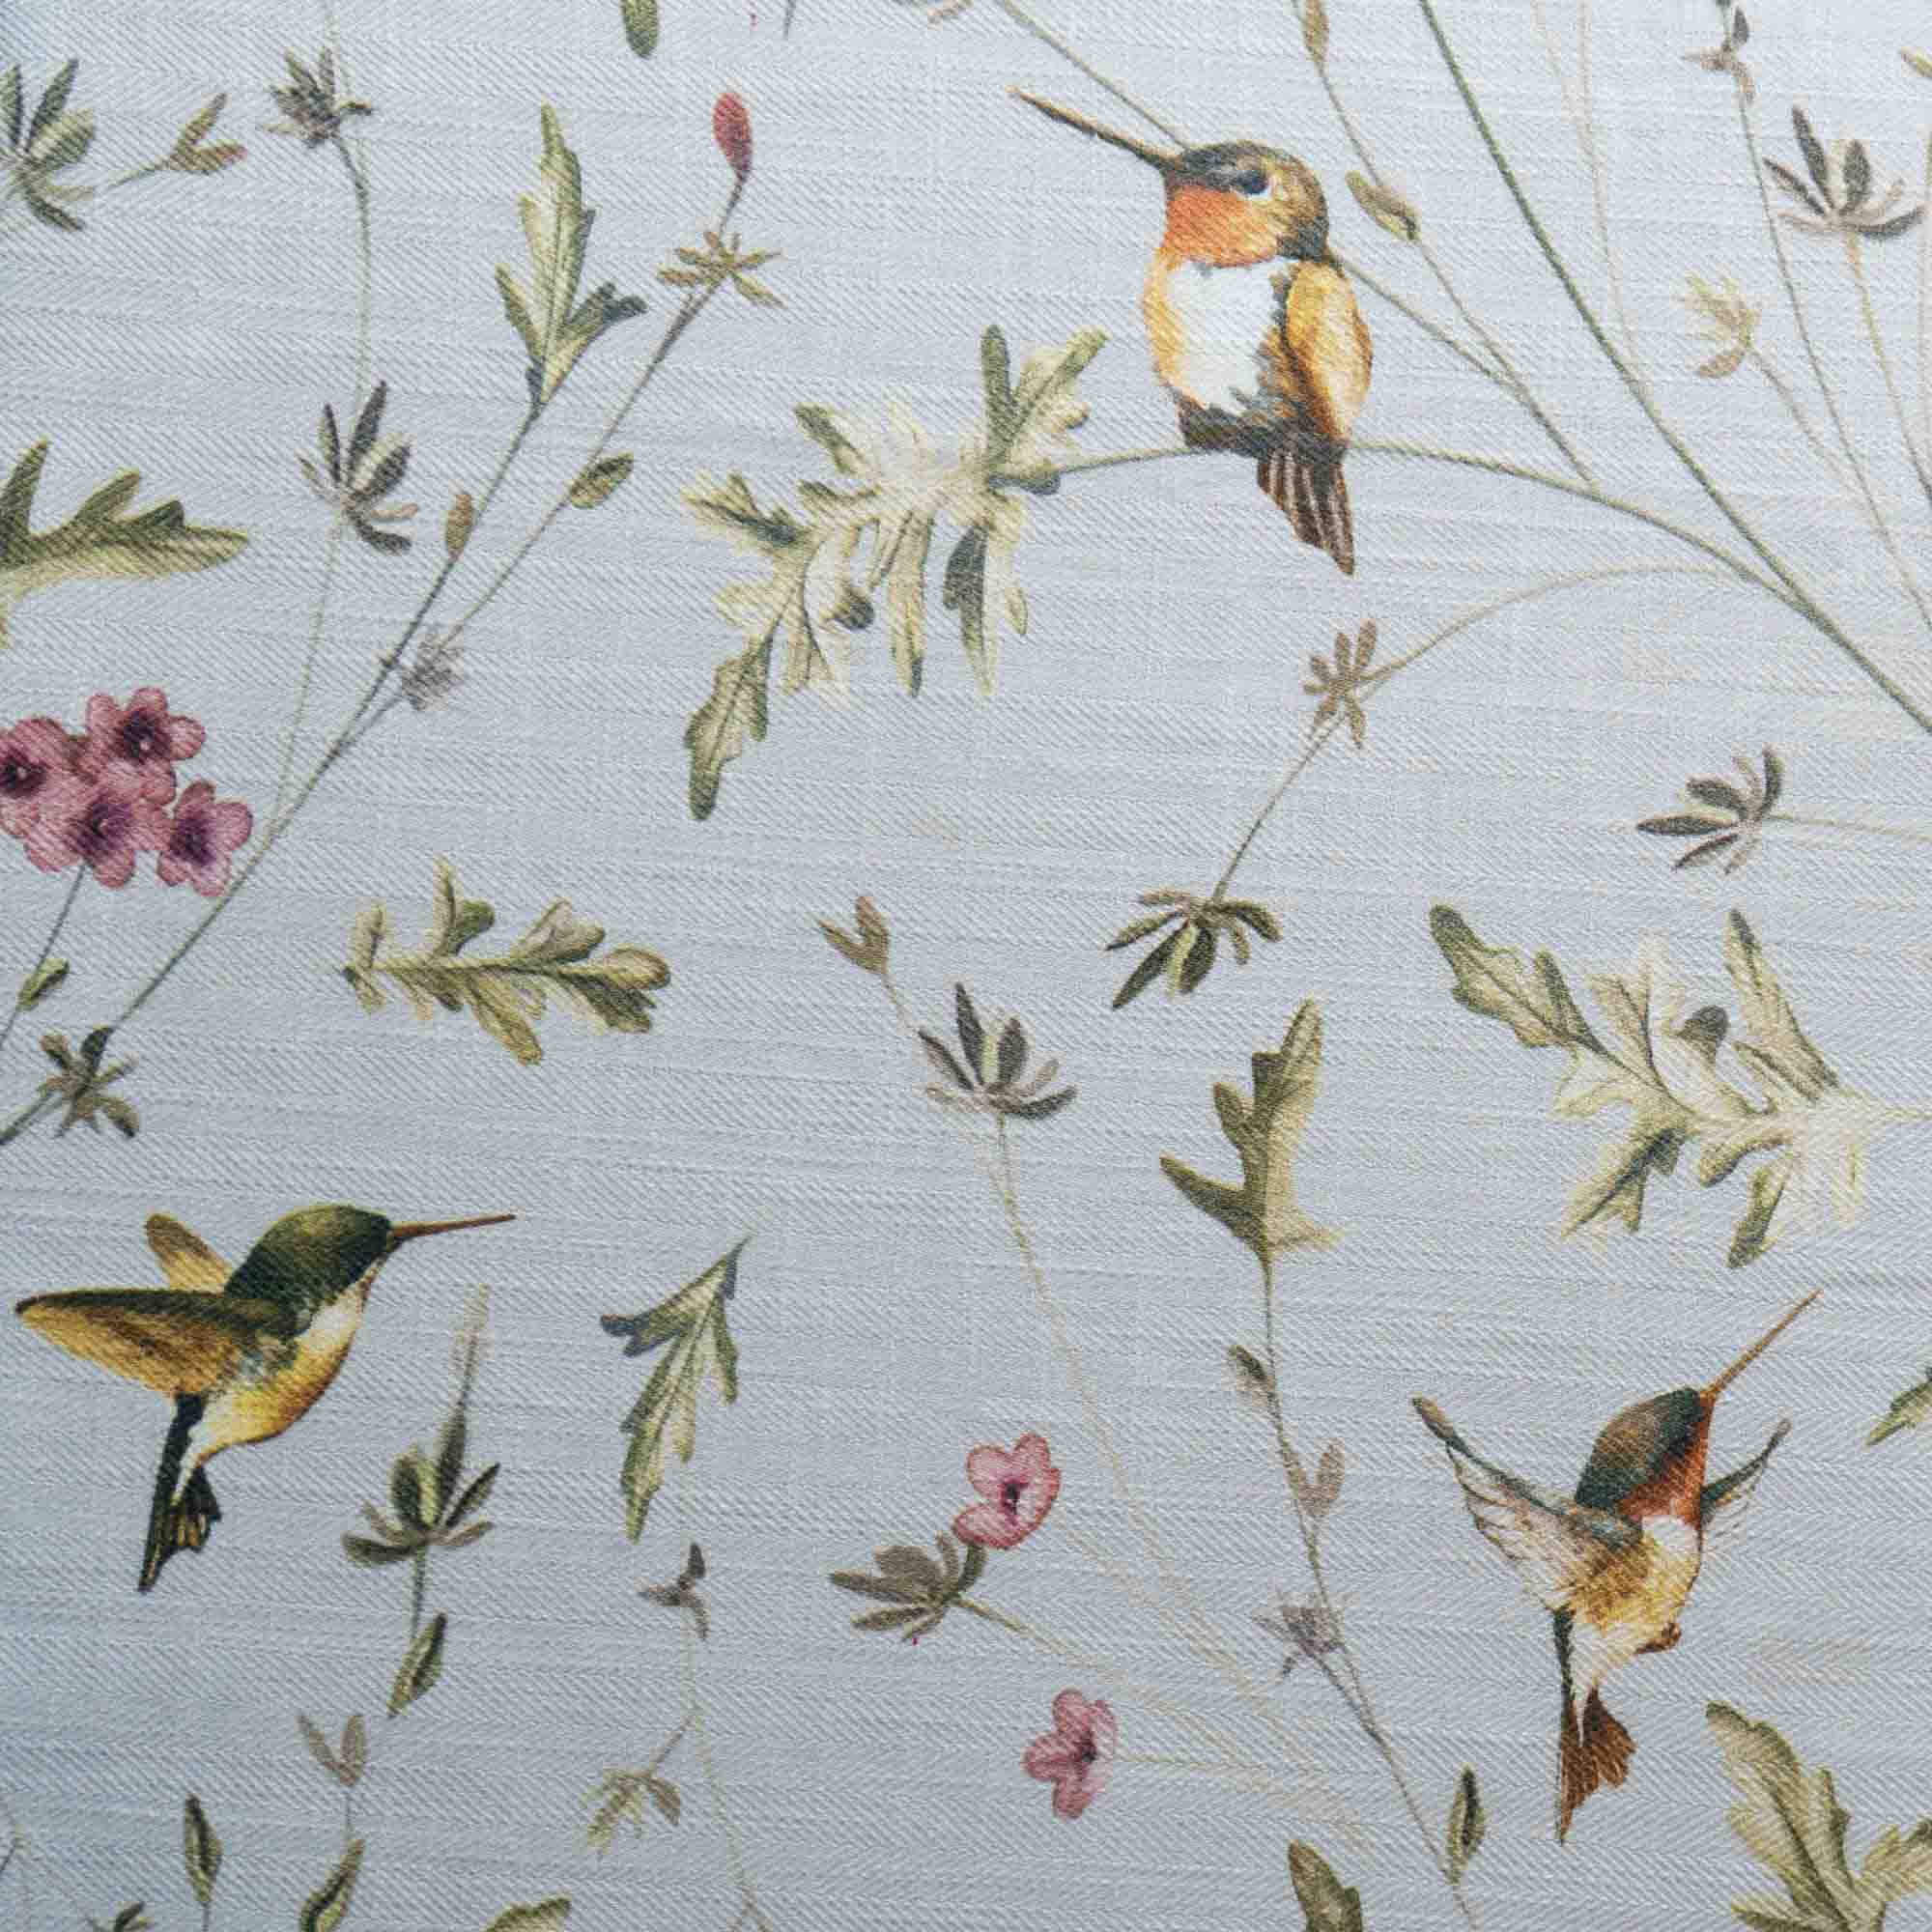 Anna's Humming Bird in Clouds Cotton Linen Blend Fabric